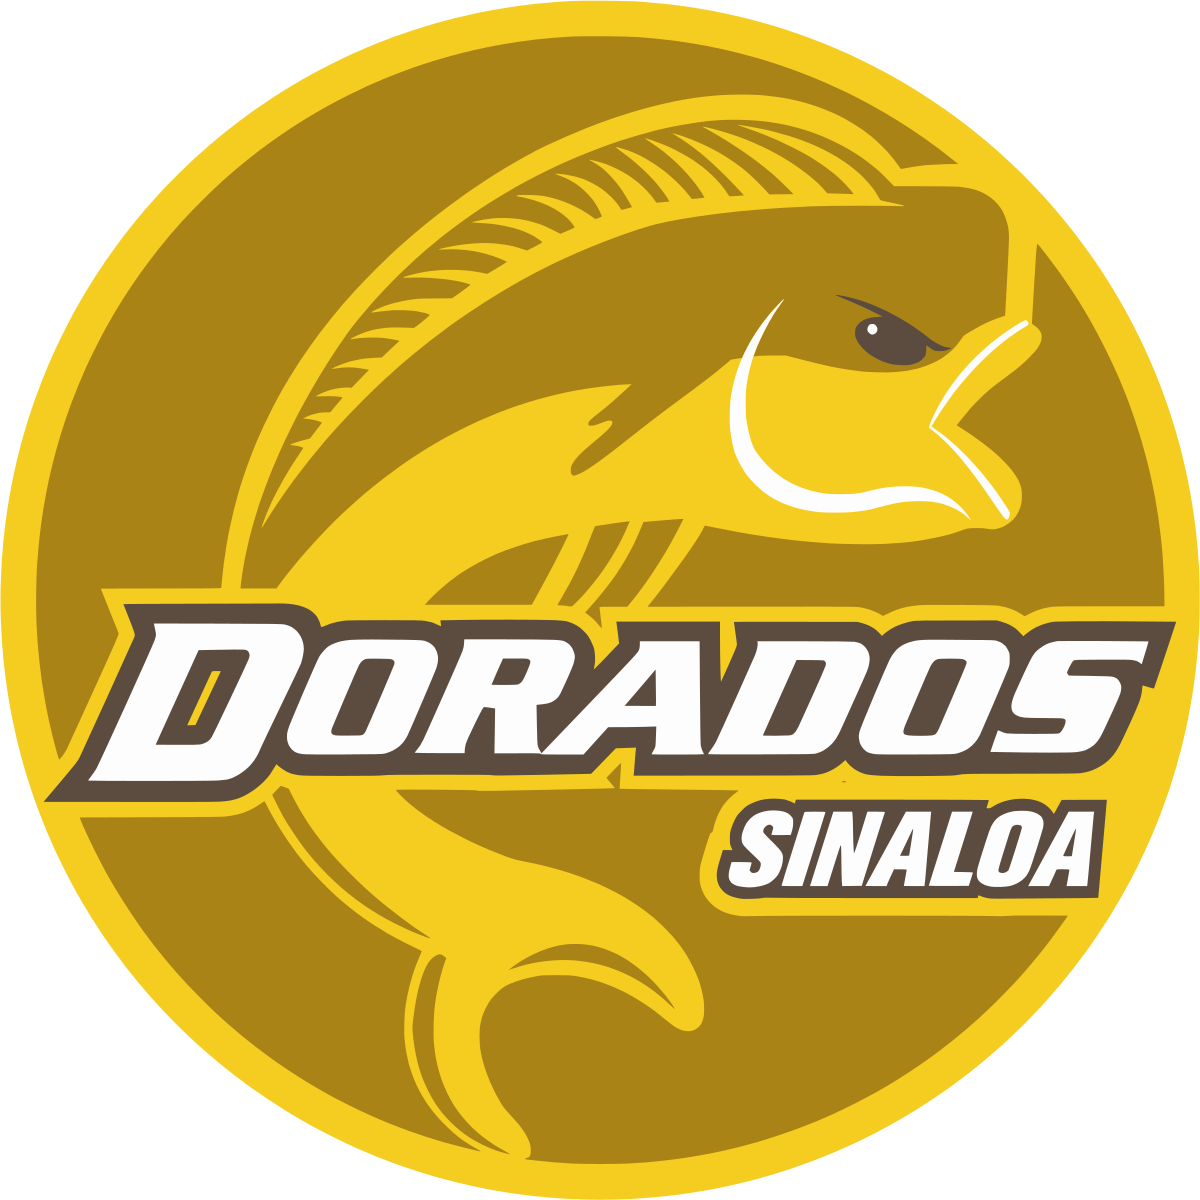 Dorados de Sinaloa - Wikipedia